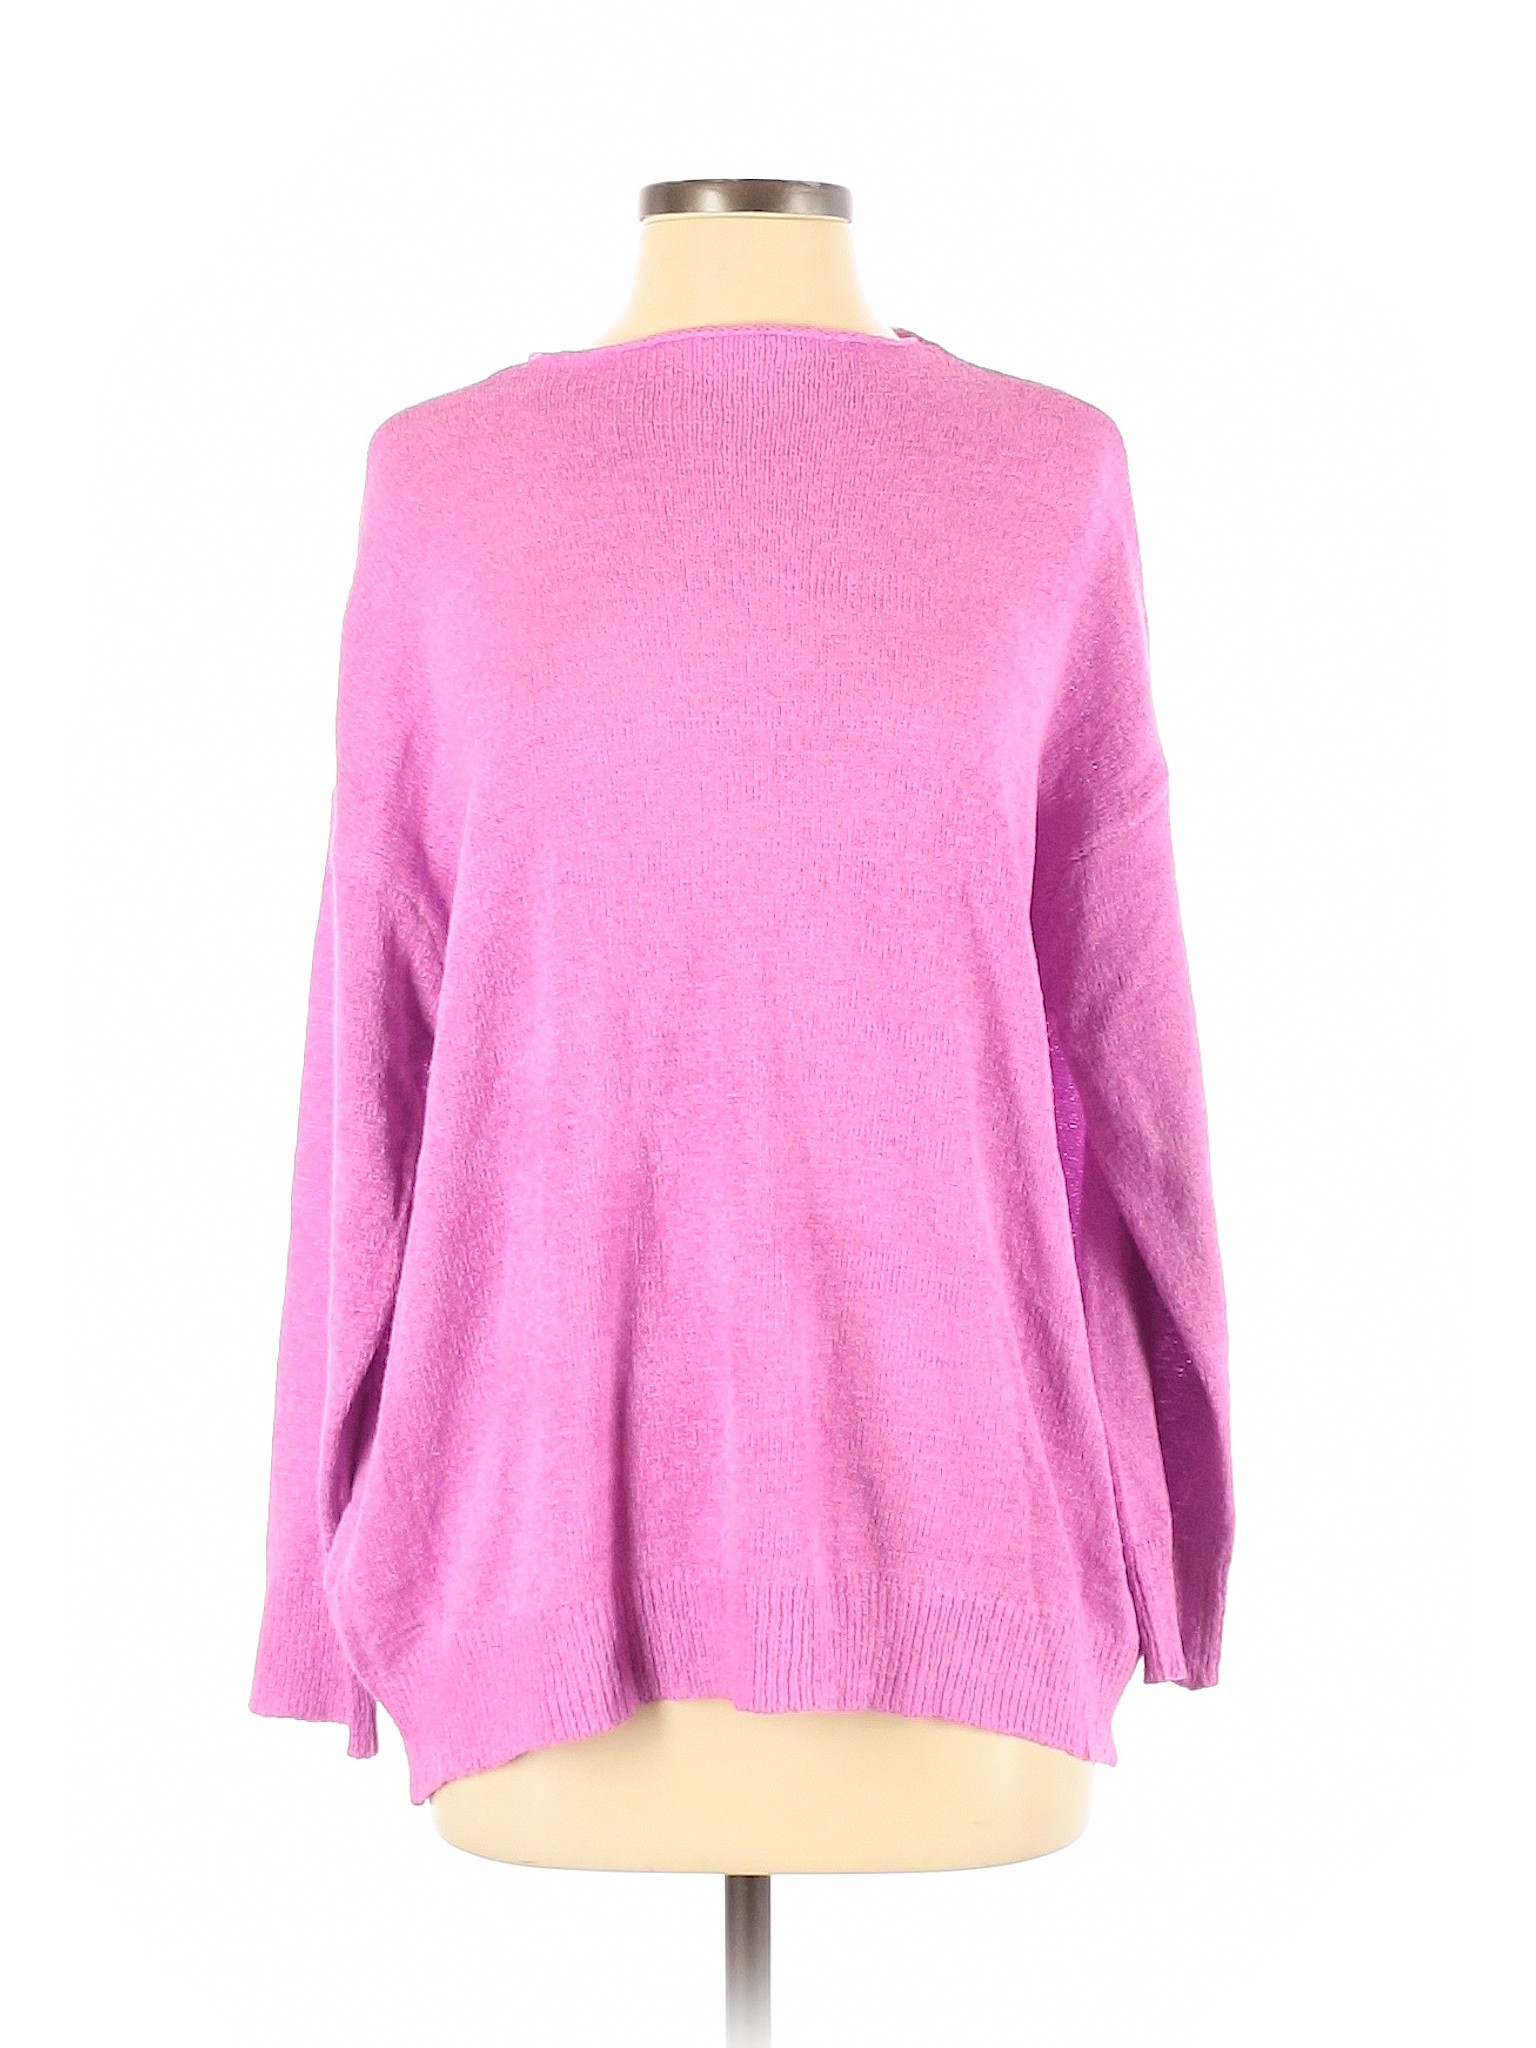 Assorted Brands Women Purple Pullover Sweater S | eBay